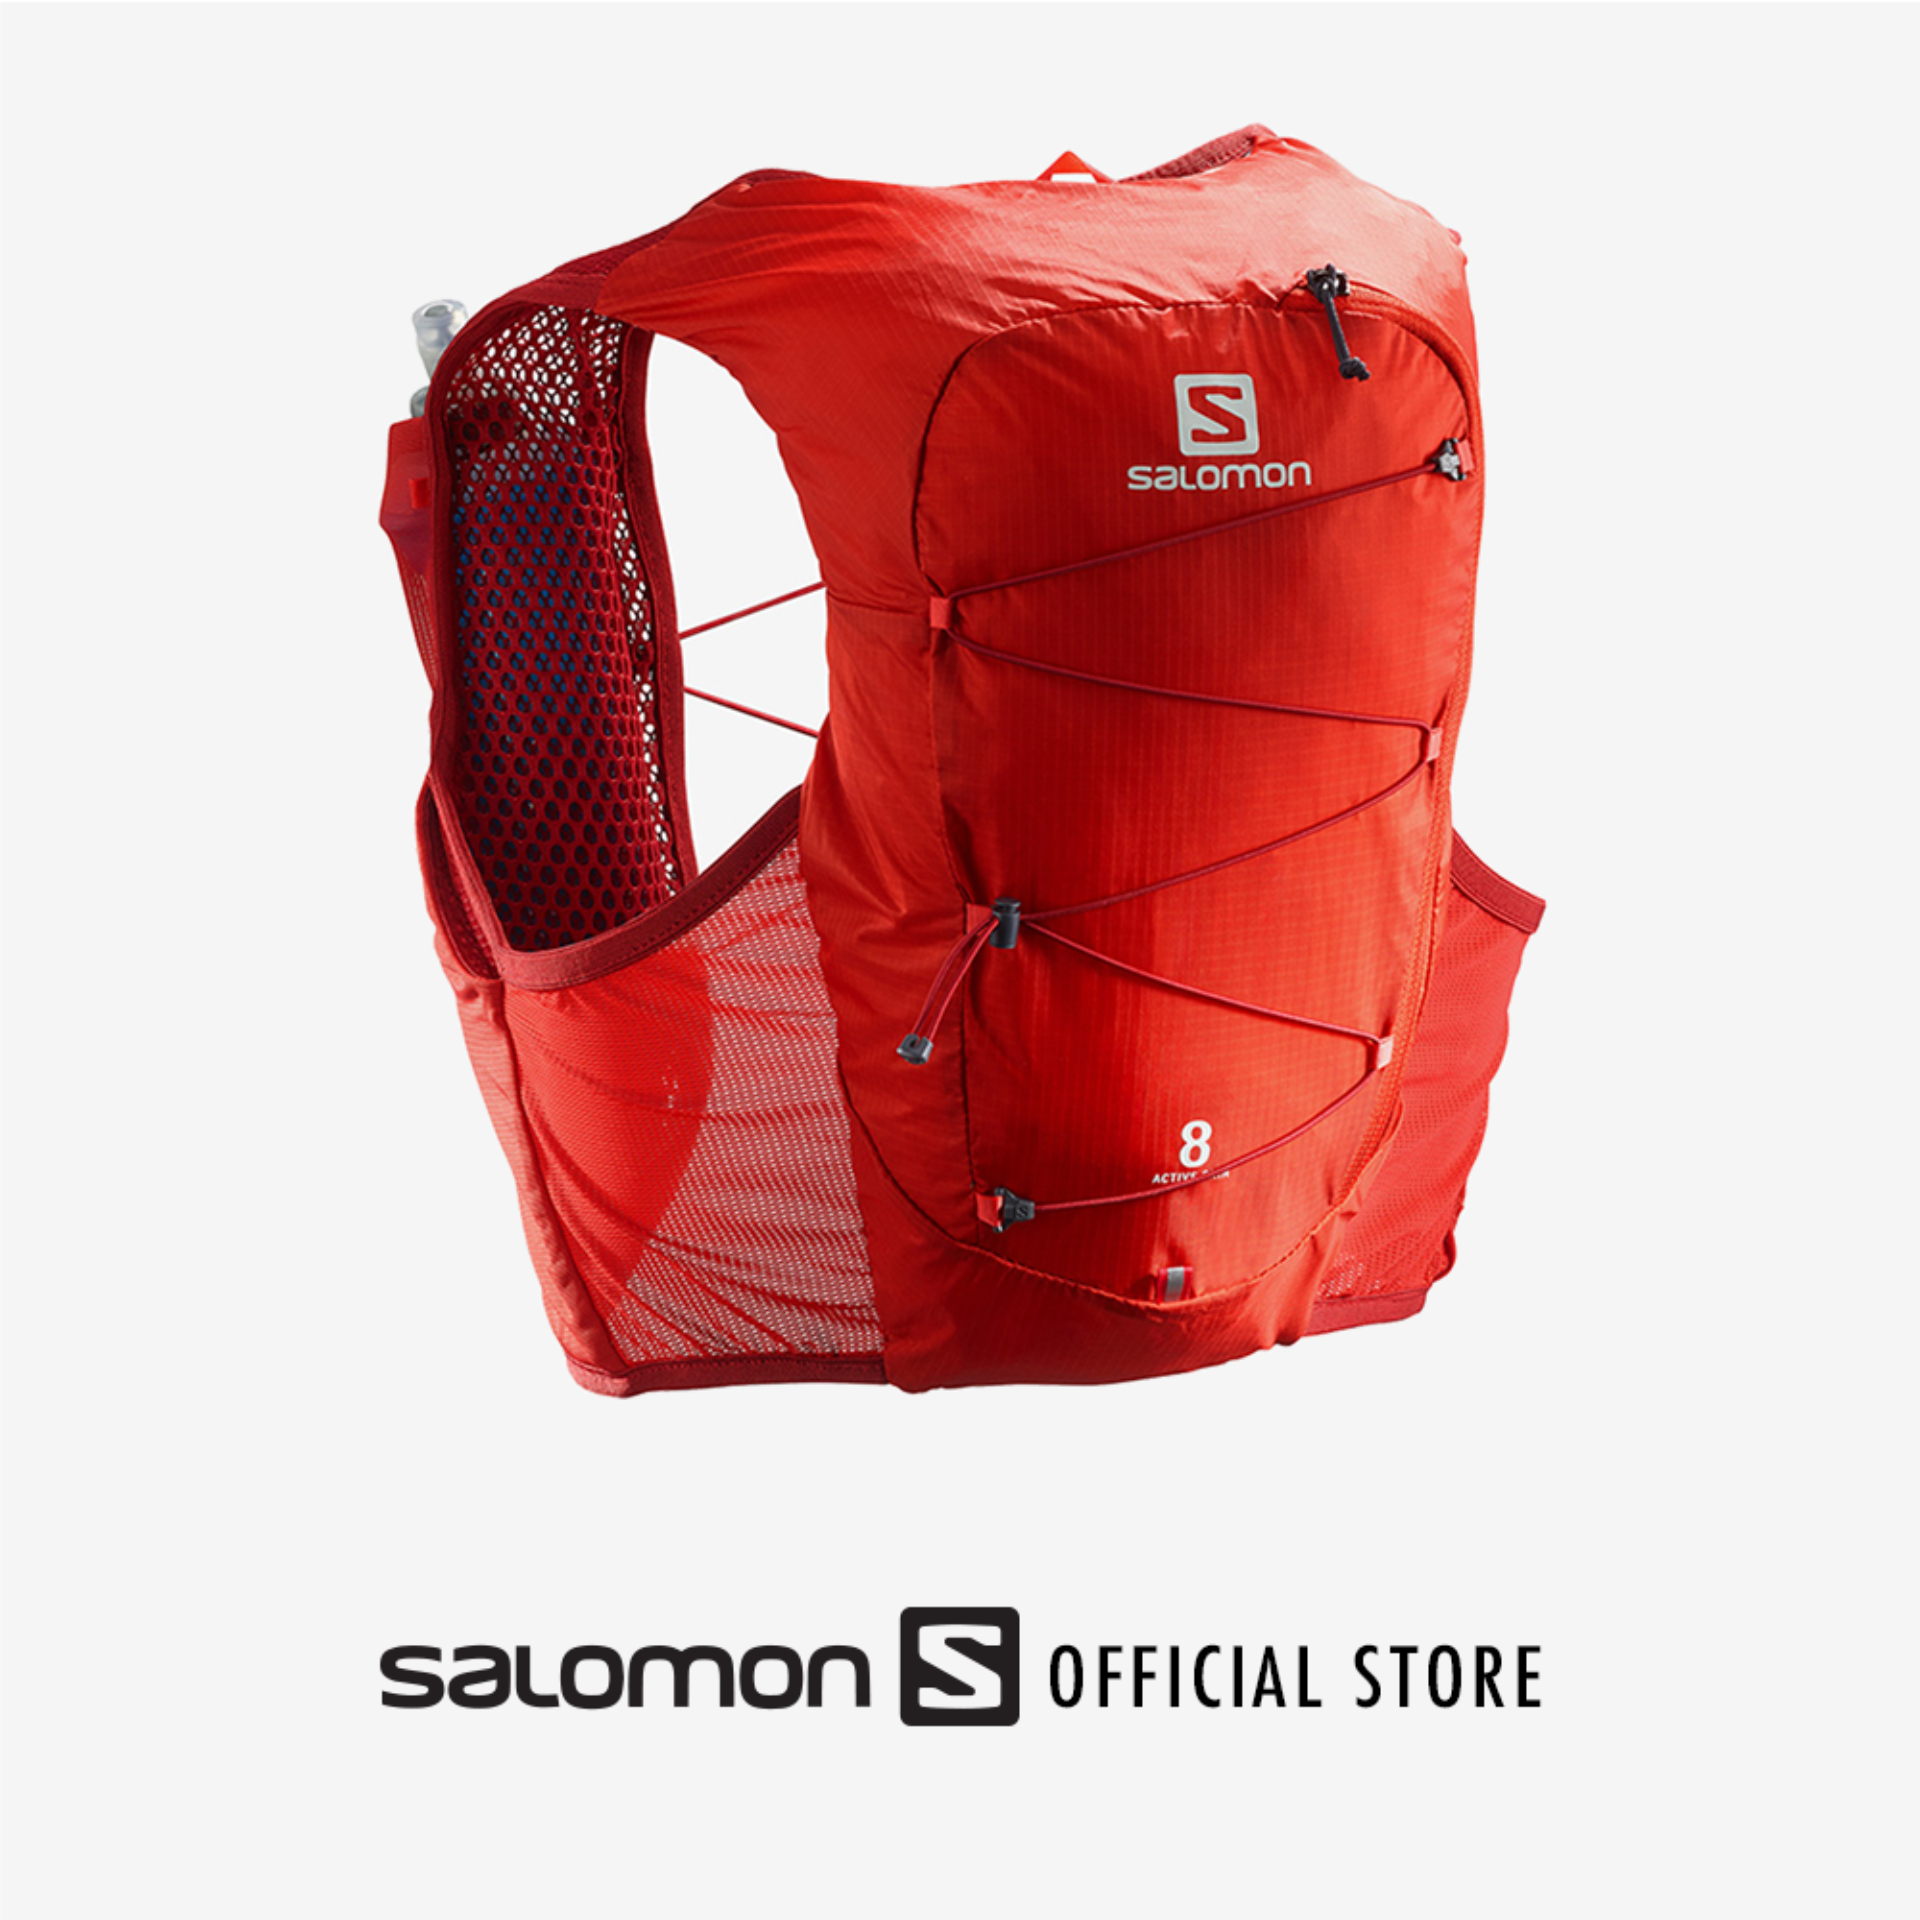 SALOMON ACTIVE SKIN 8 SET (SIZE XL) เป้น้ำ Unisex อุปกรณ์วิ่ง Trail Running วิ่งเทรล